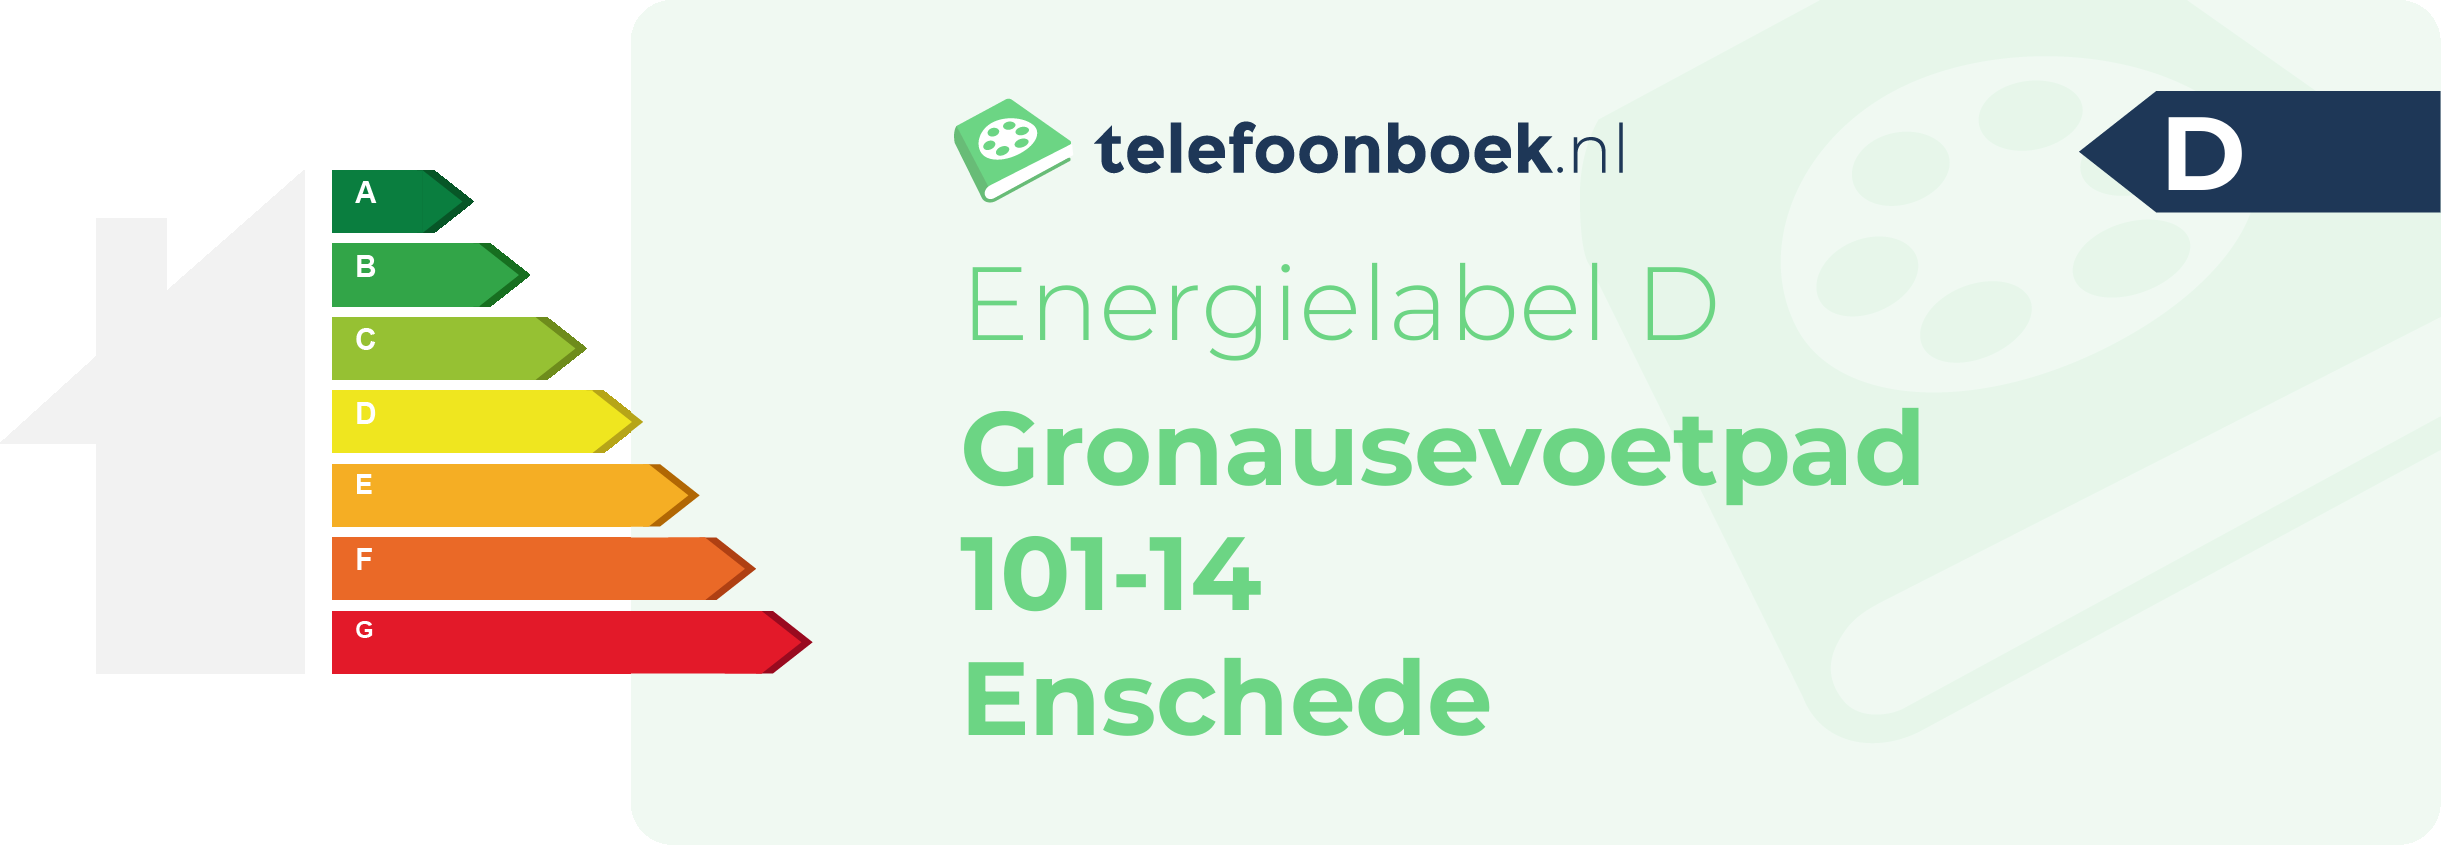 Energielabel Gronausevoetpad 101-14 Enschede